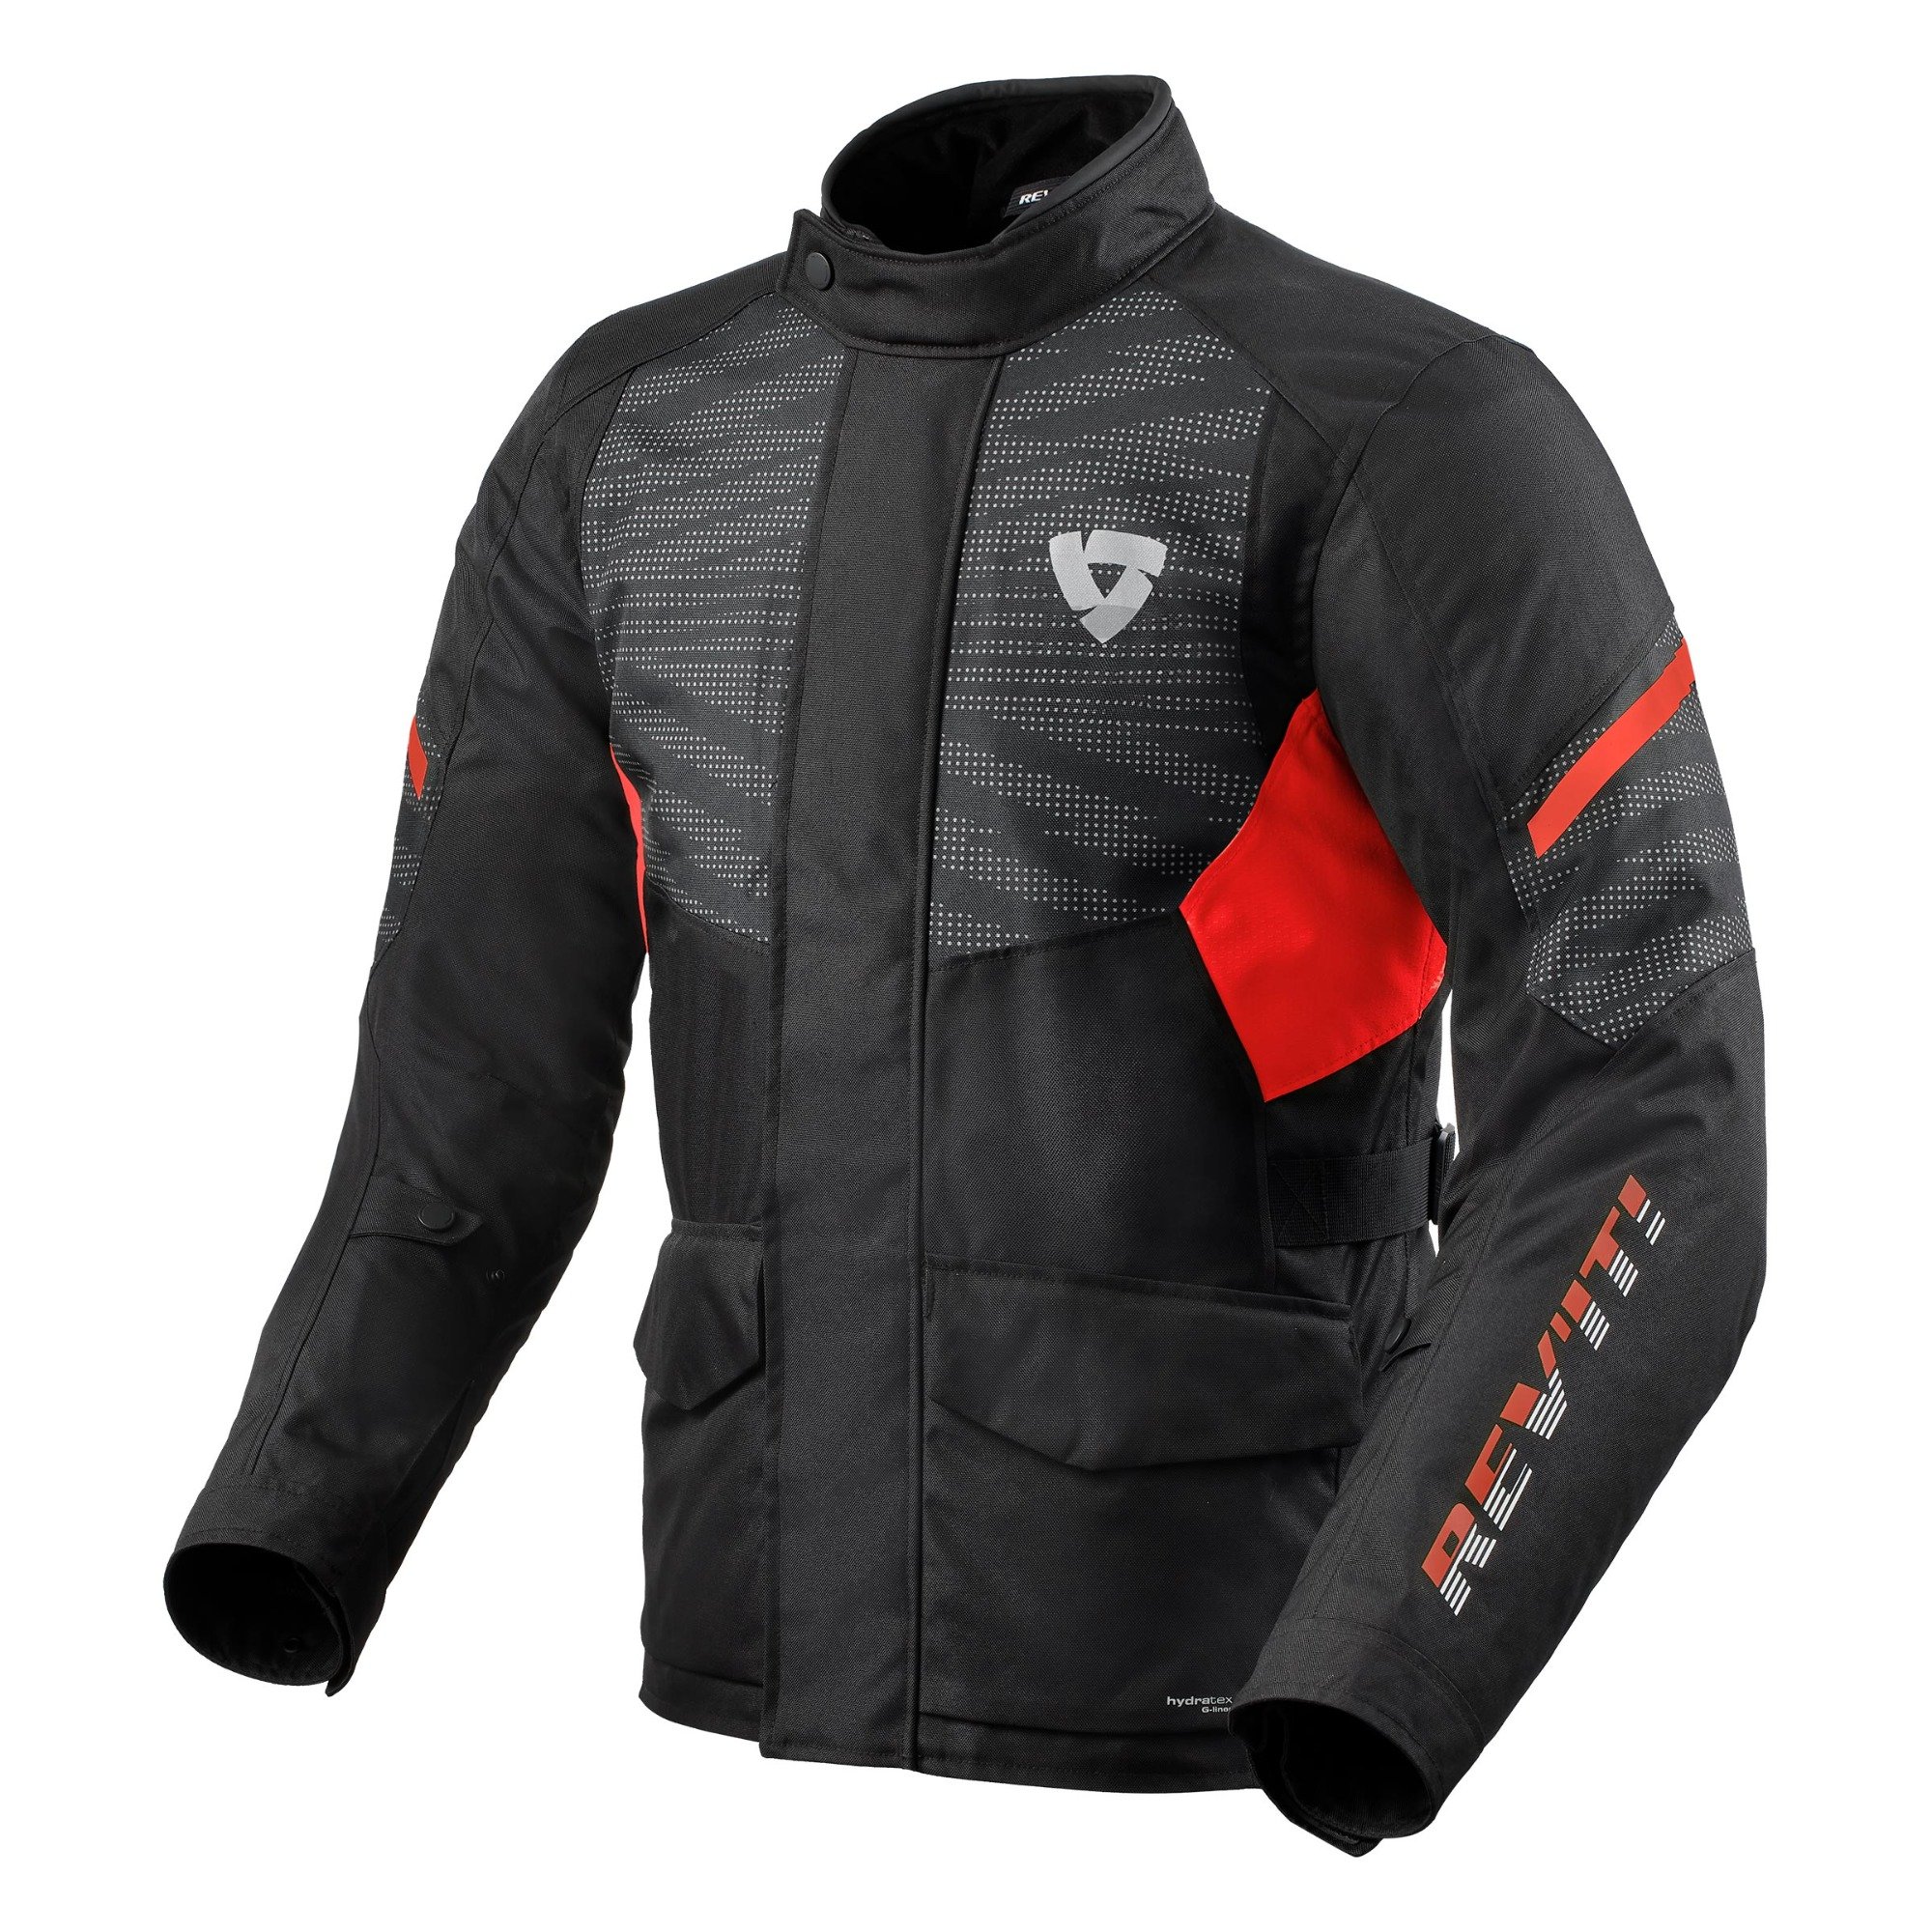 Image of REV'IT! Duke H2O Jacket Black Red Size 3XL ID 8700001332071